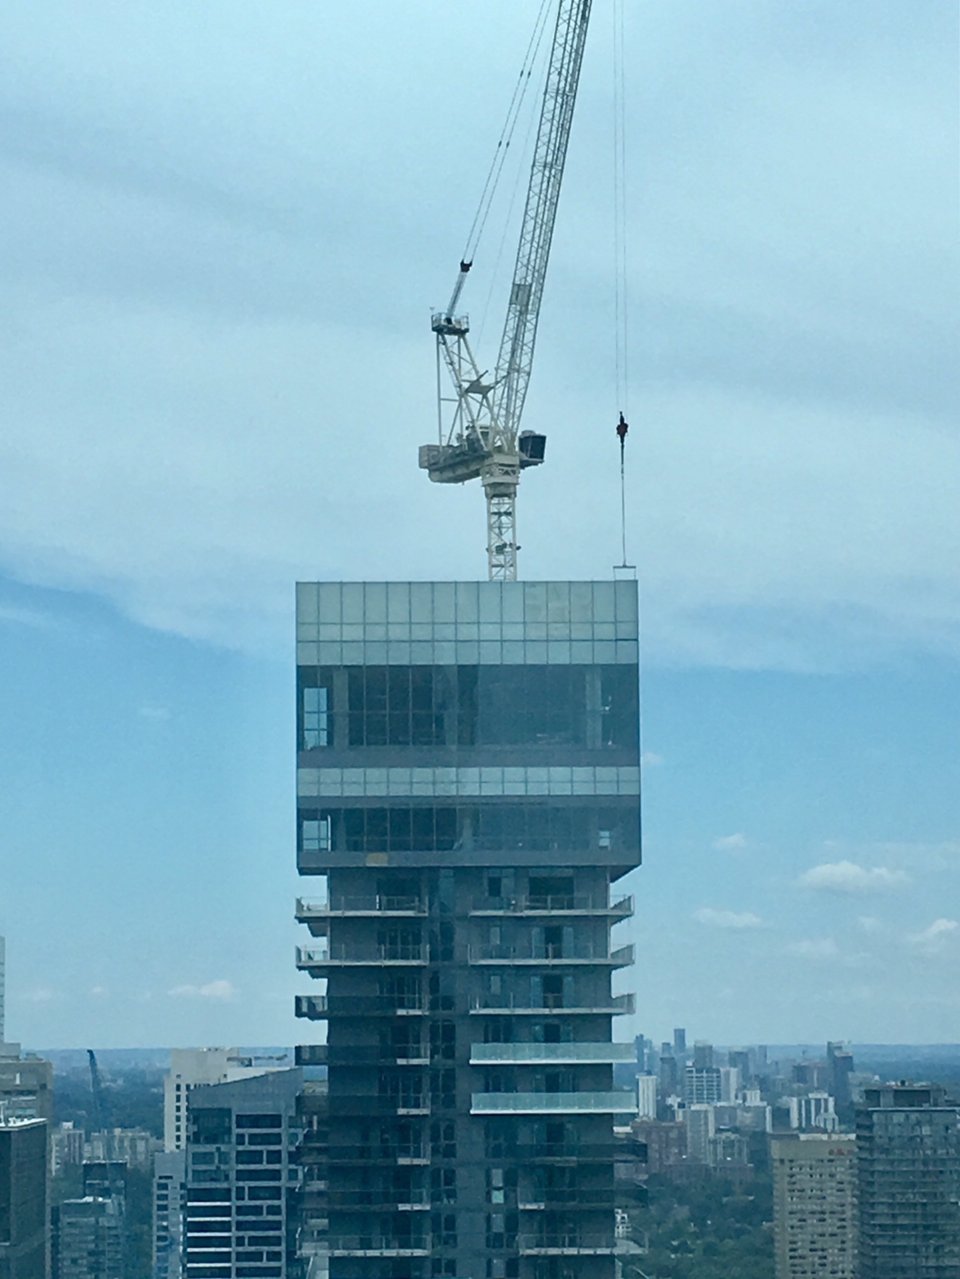 YC Condos - Construction - August 13, 2018.jpg